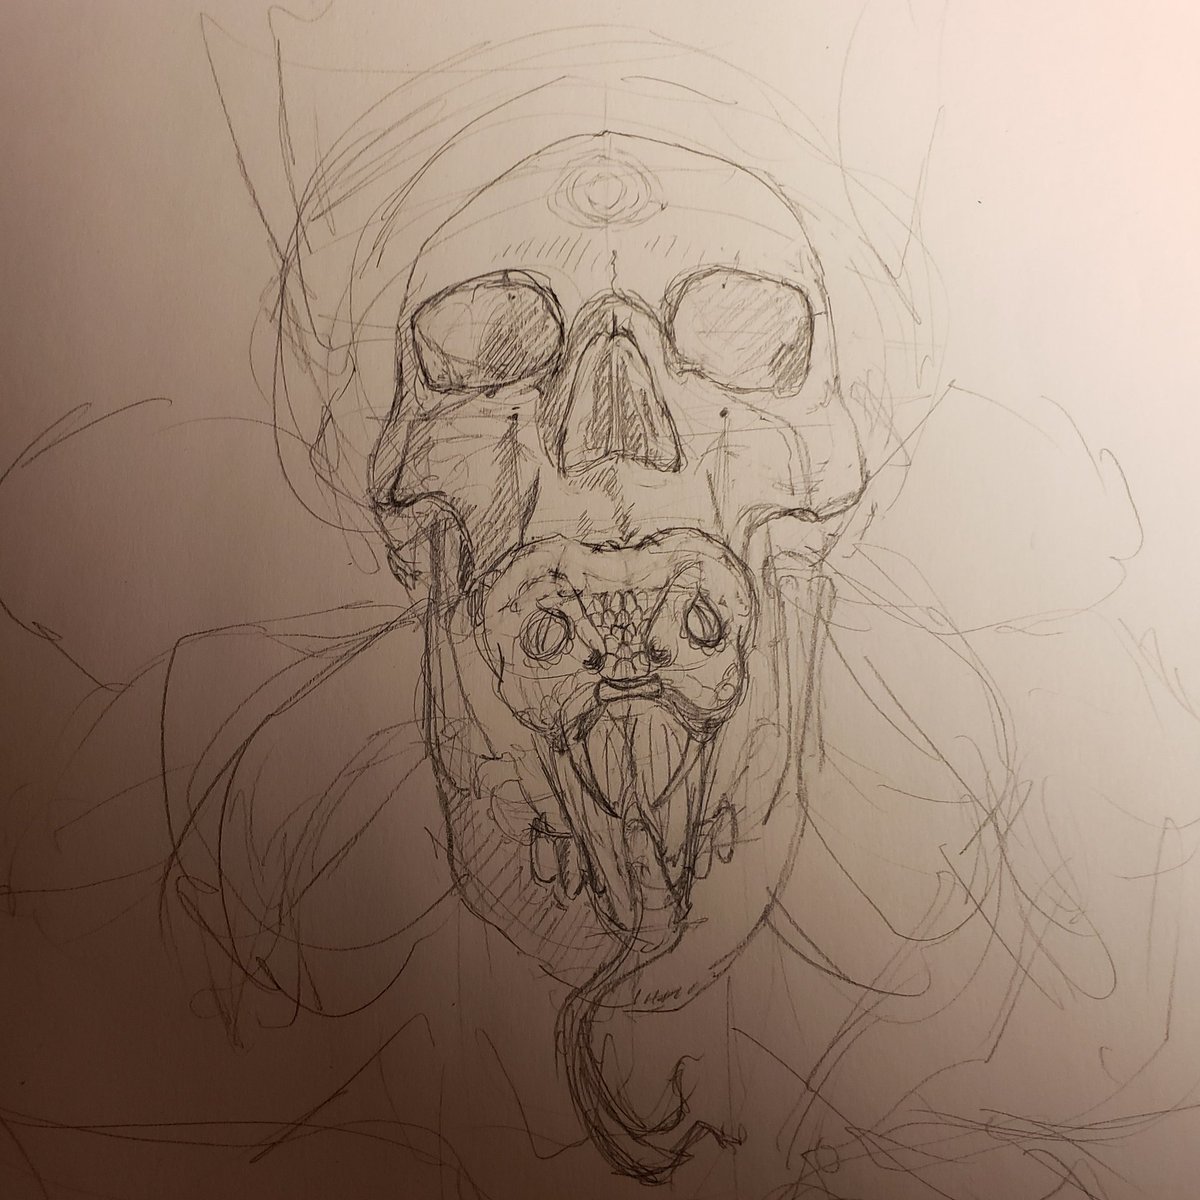 Started this little sketch last night 

#drawing #sketch #sketchbook #skull #snake #draw #art #artist #chronicillnesswarrior #chronicillnessartist #lupuswarrior #disabledartist